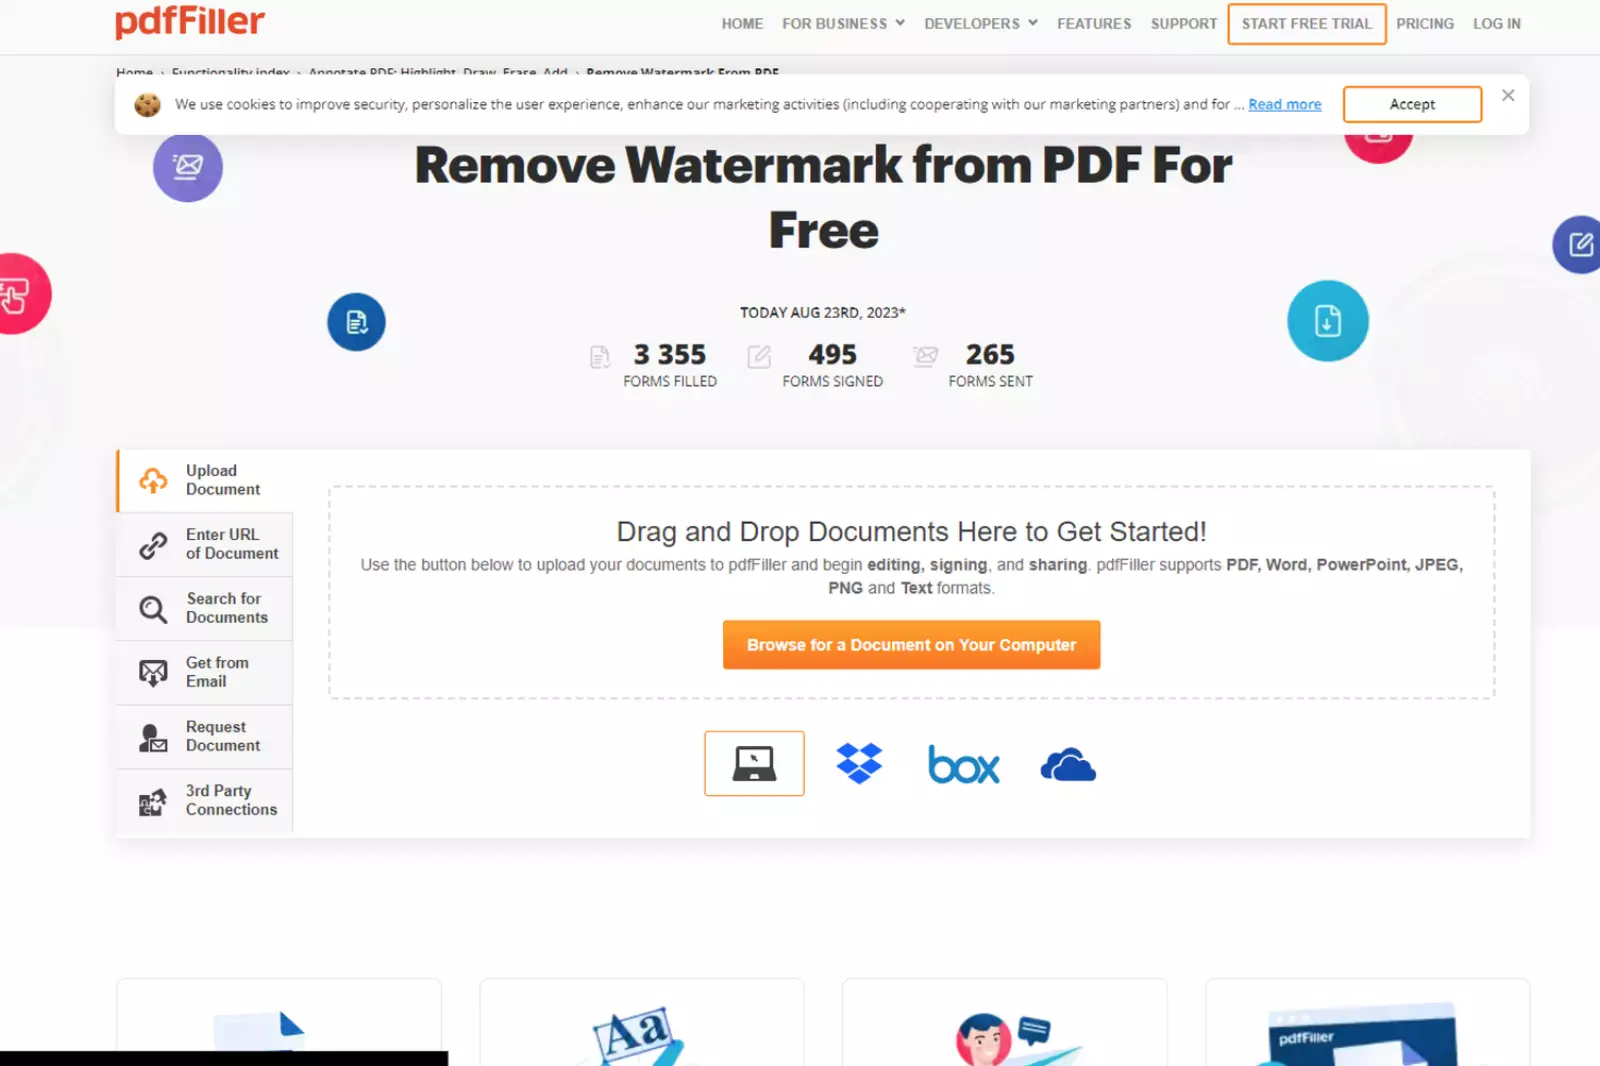 PDF filler Watermark remover